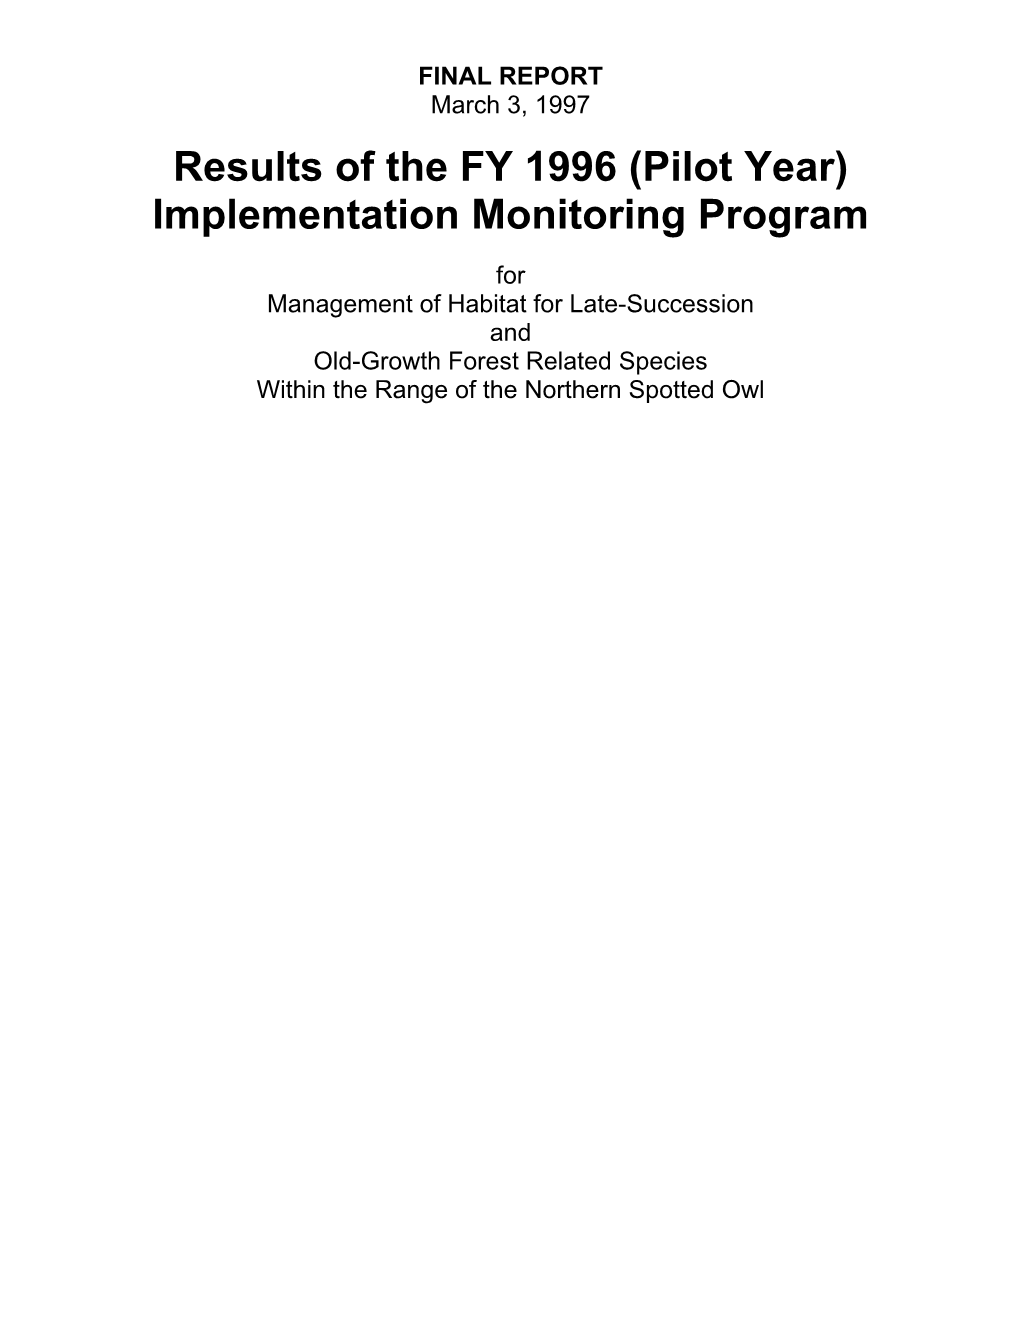 Implementation Monitoring Program